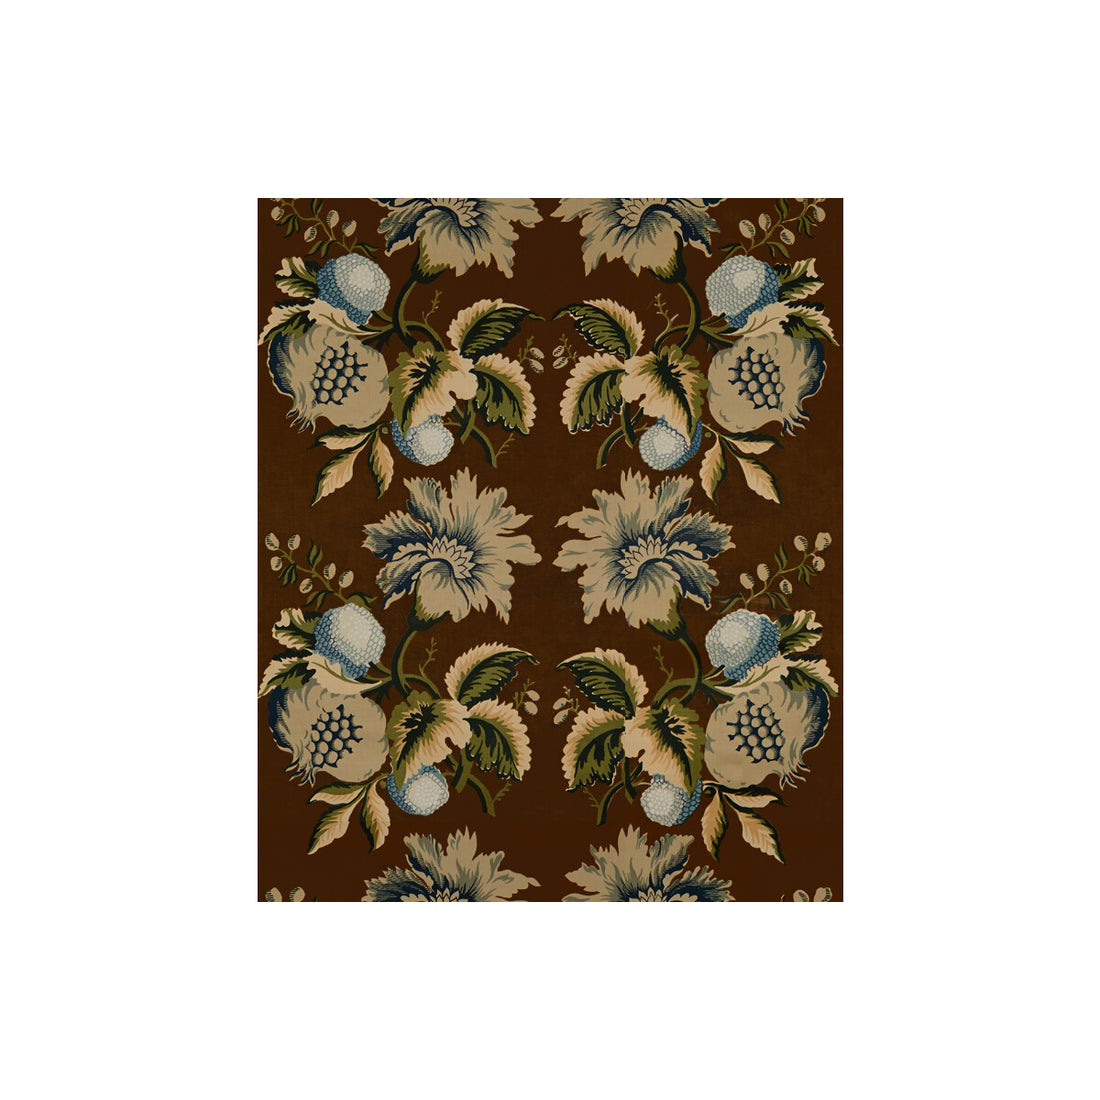 Jessup fabric in sepia/indigo color - pattern 2012142.650.0 - by Lee Jofa in the Oscar De La Renta II collection